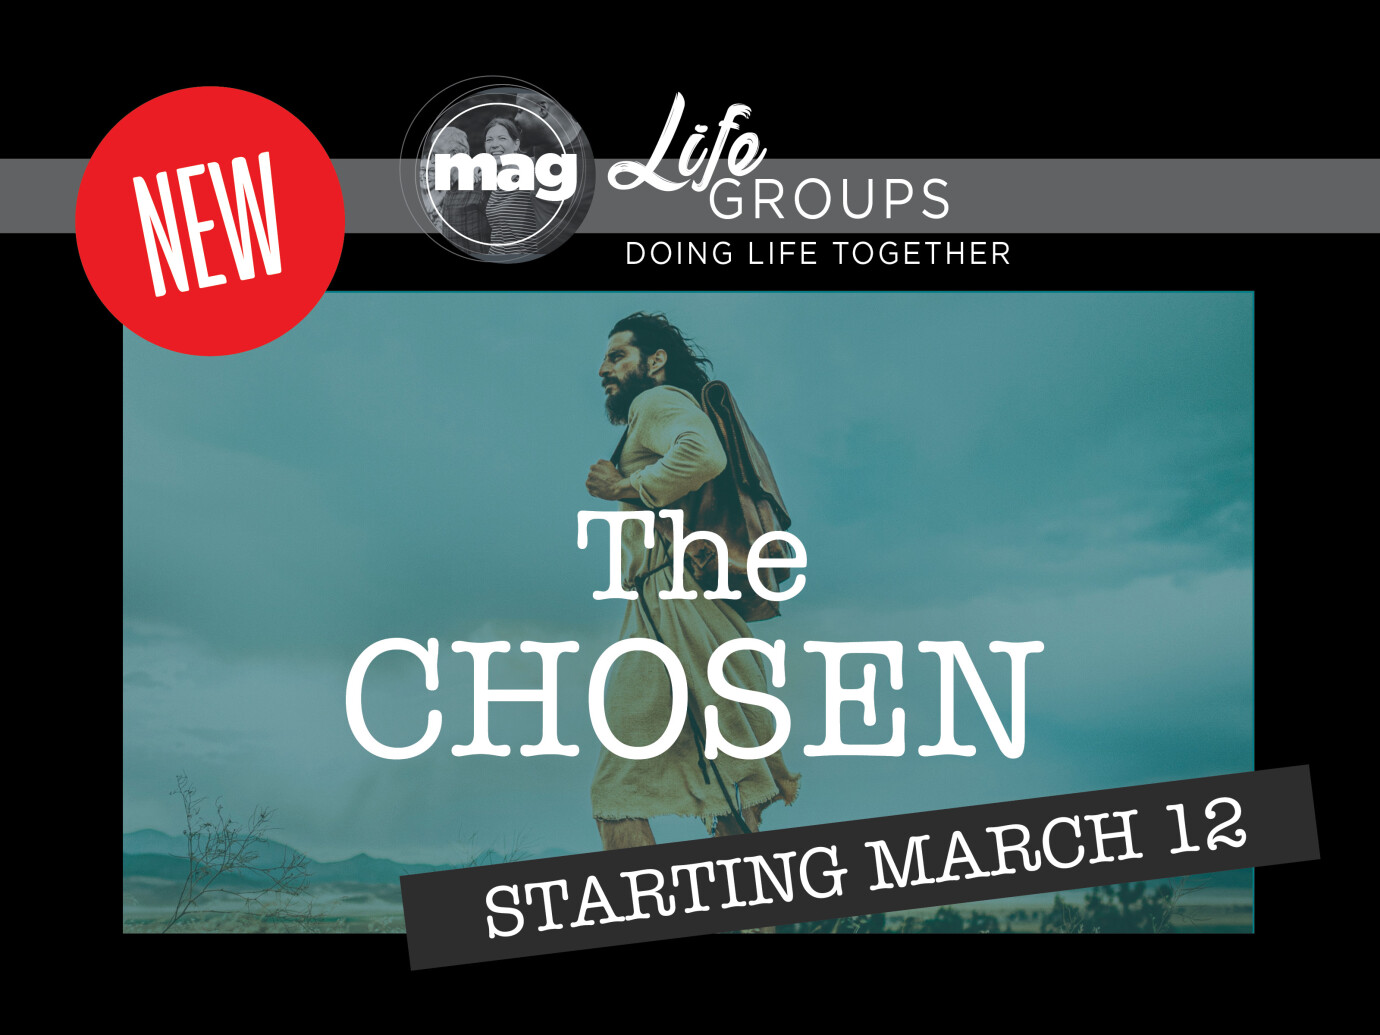 The Chosen LifeGroup